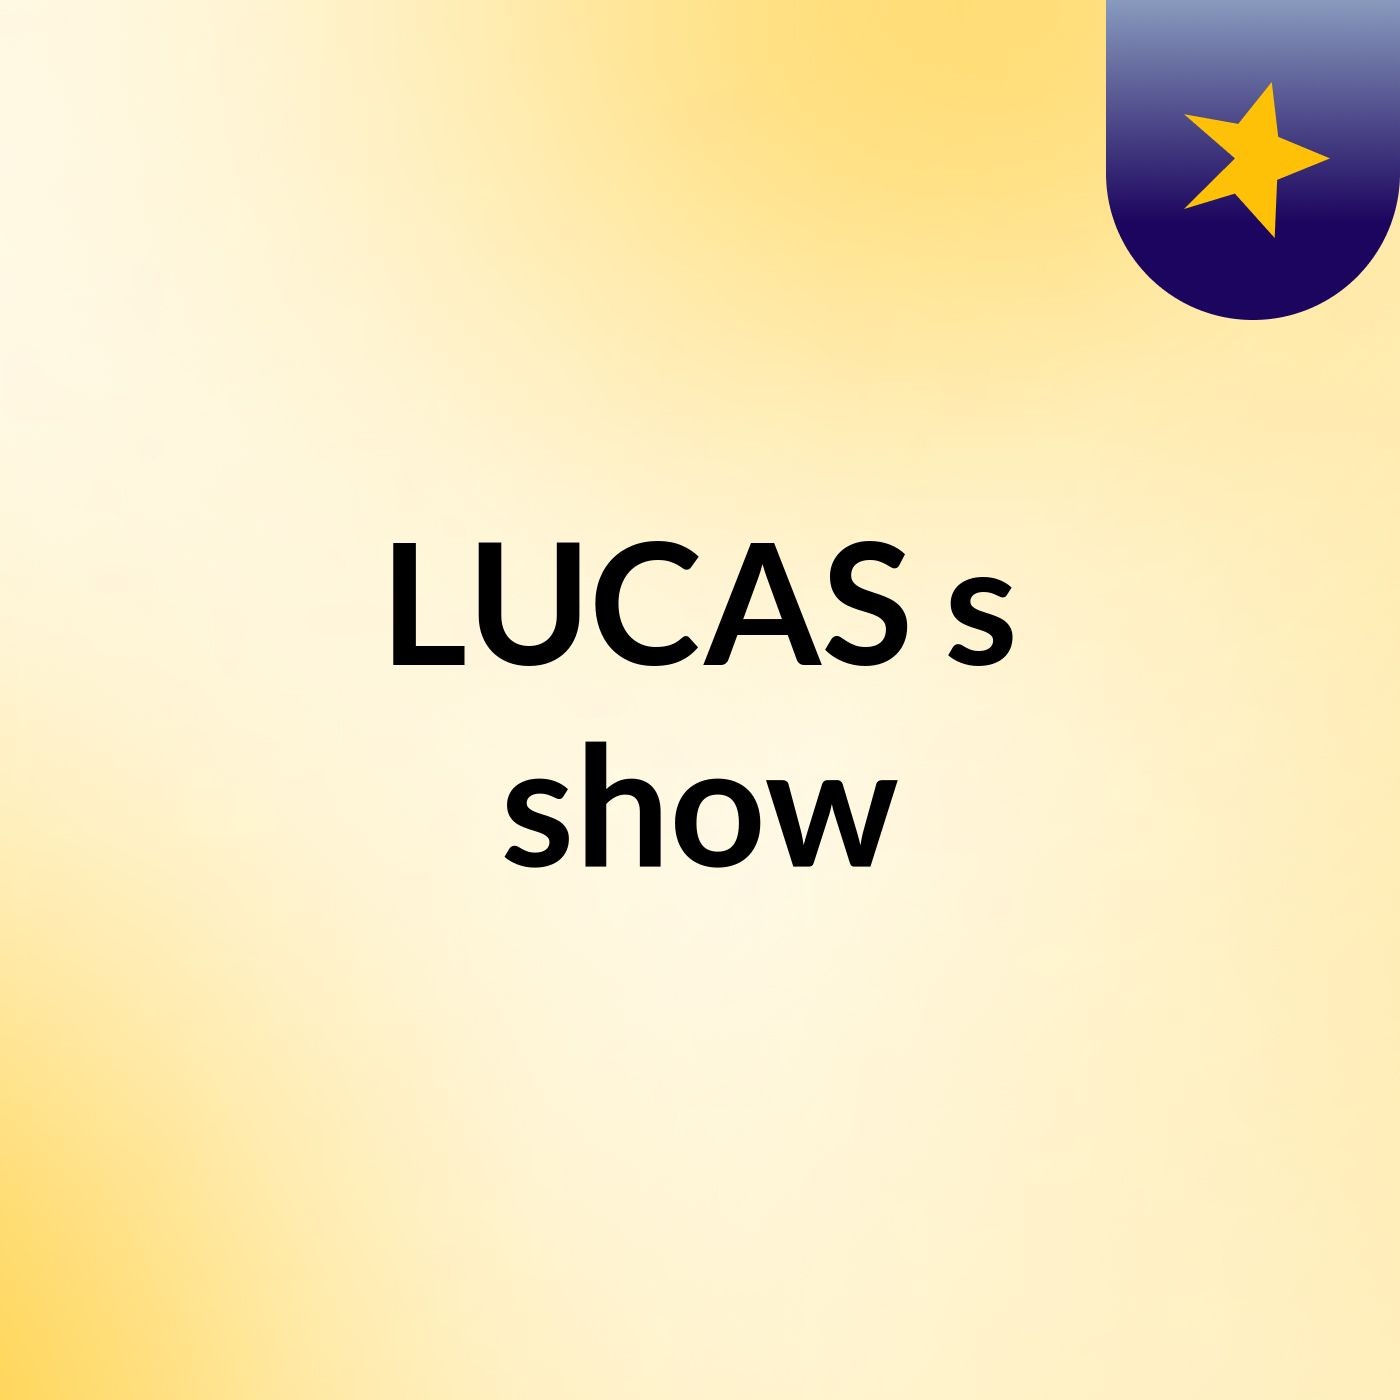 LUCAS's show